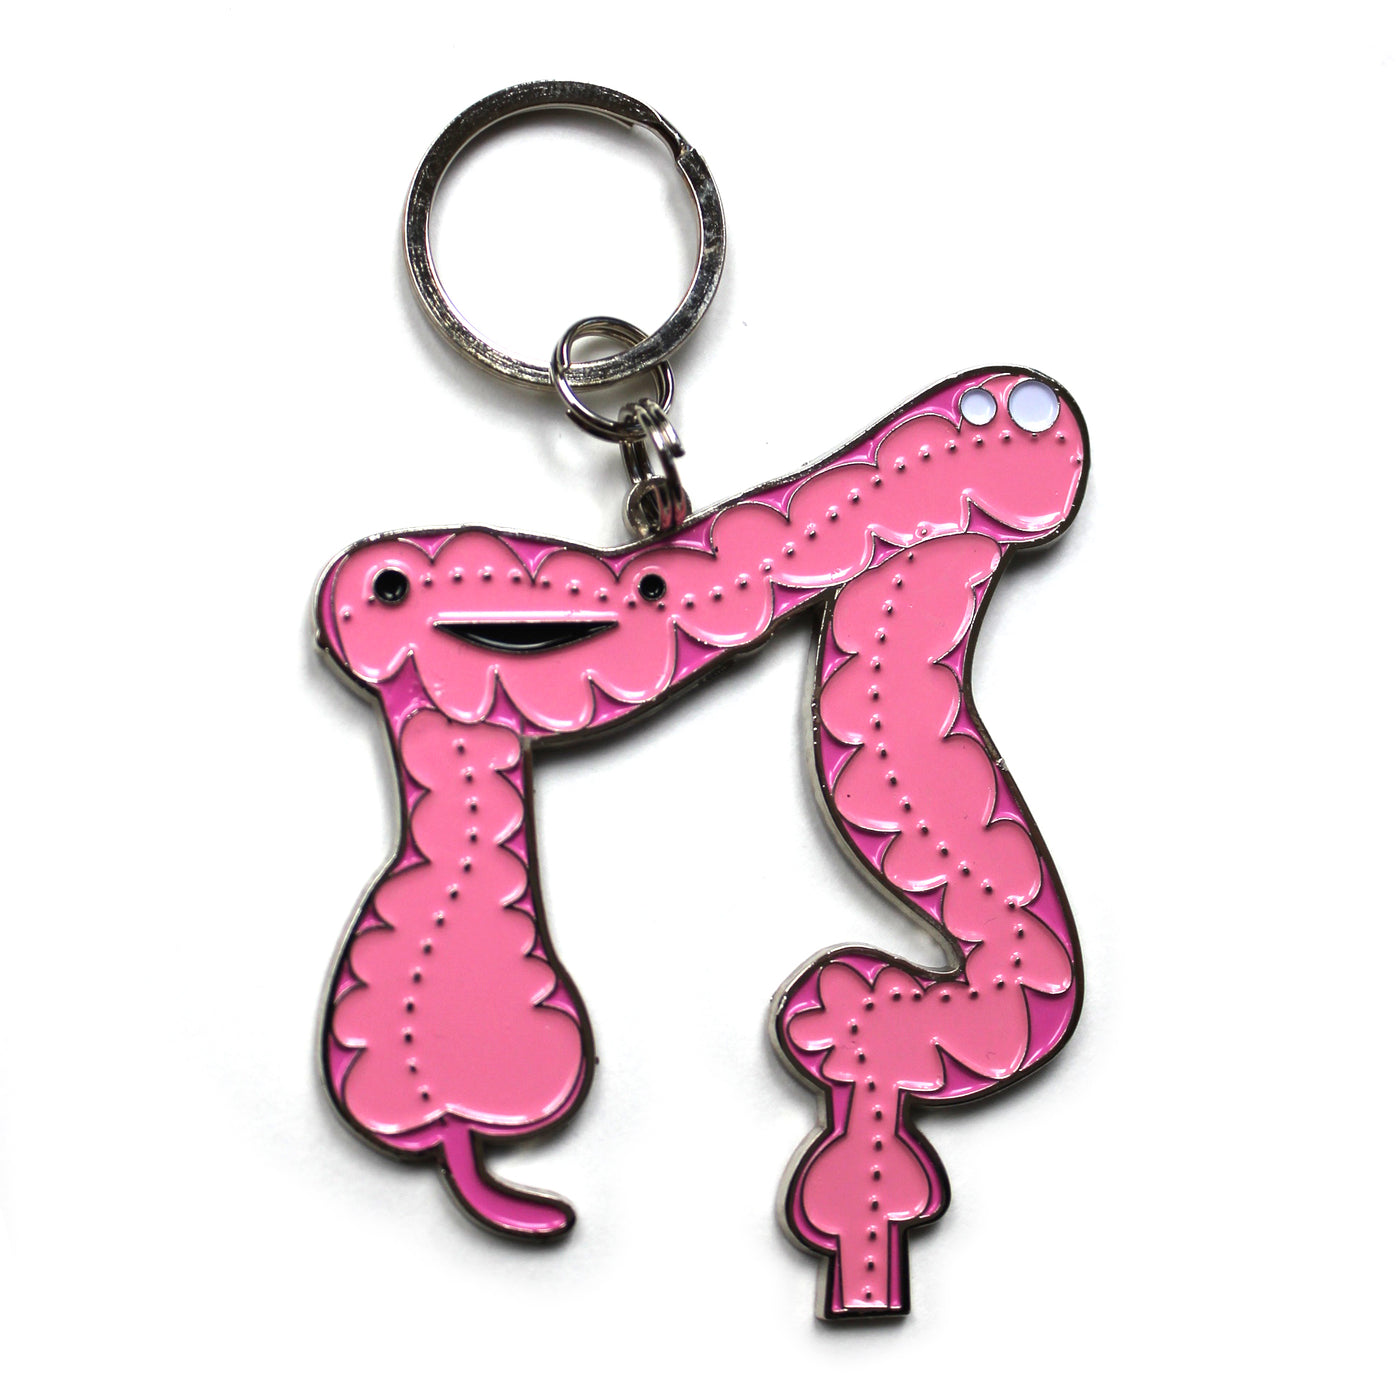 Colon Keychain - Cute Colon Keychains - Anatomical Colon Keychains for IBD IBS